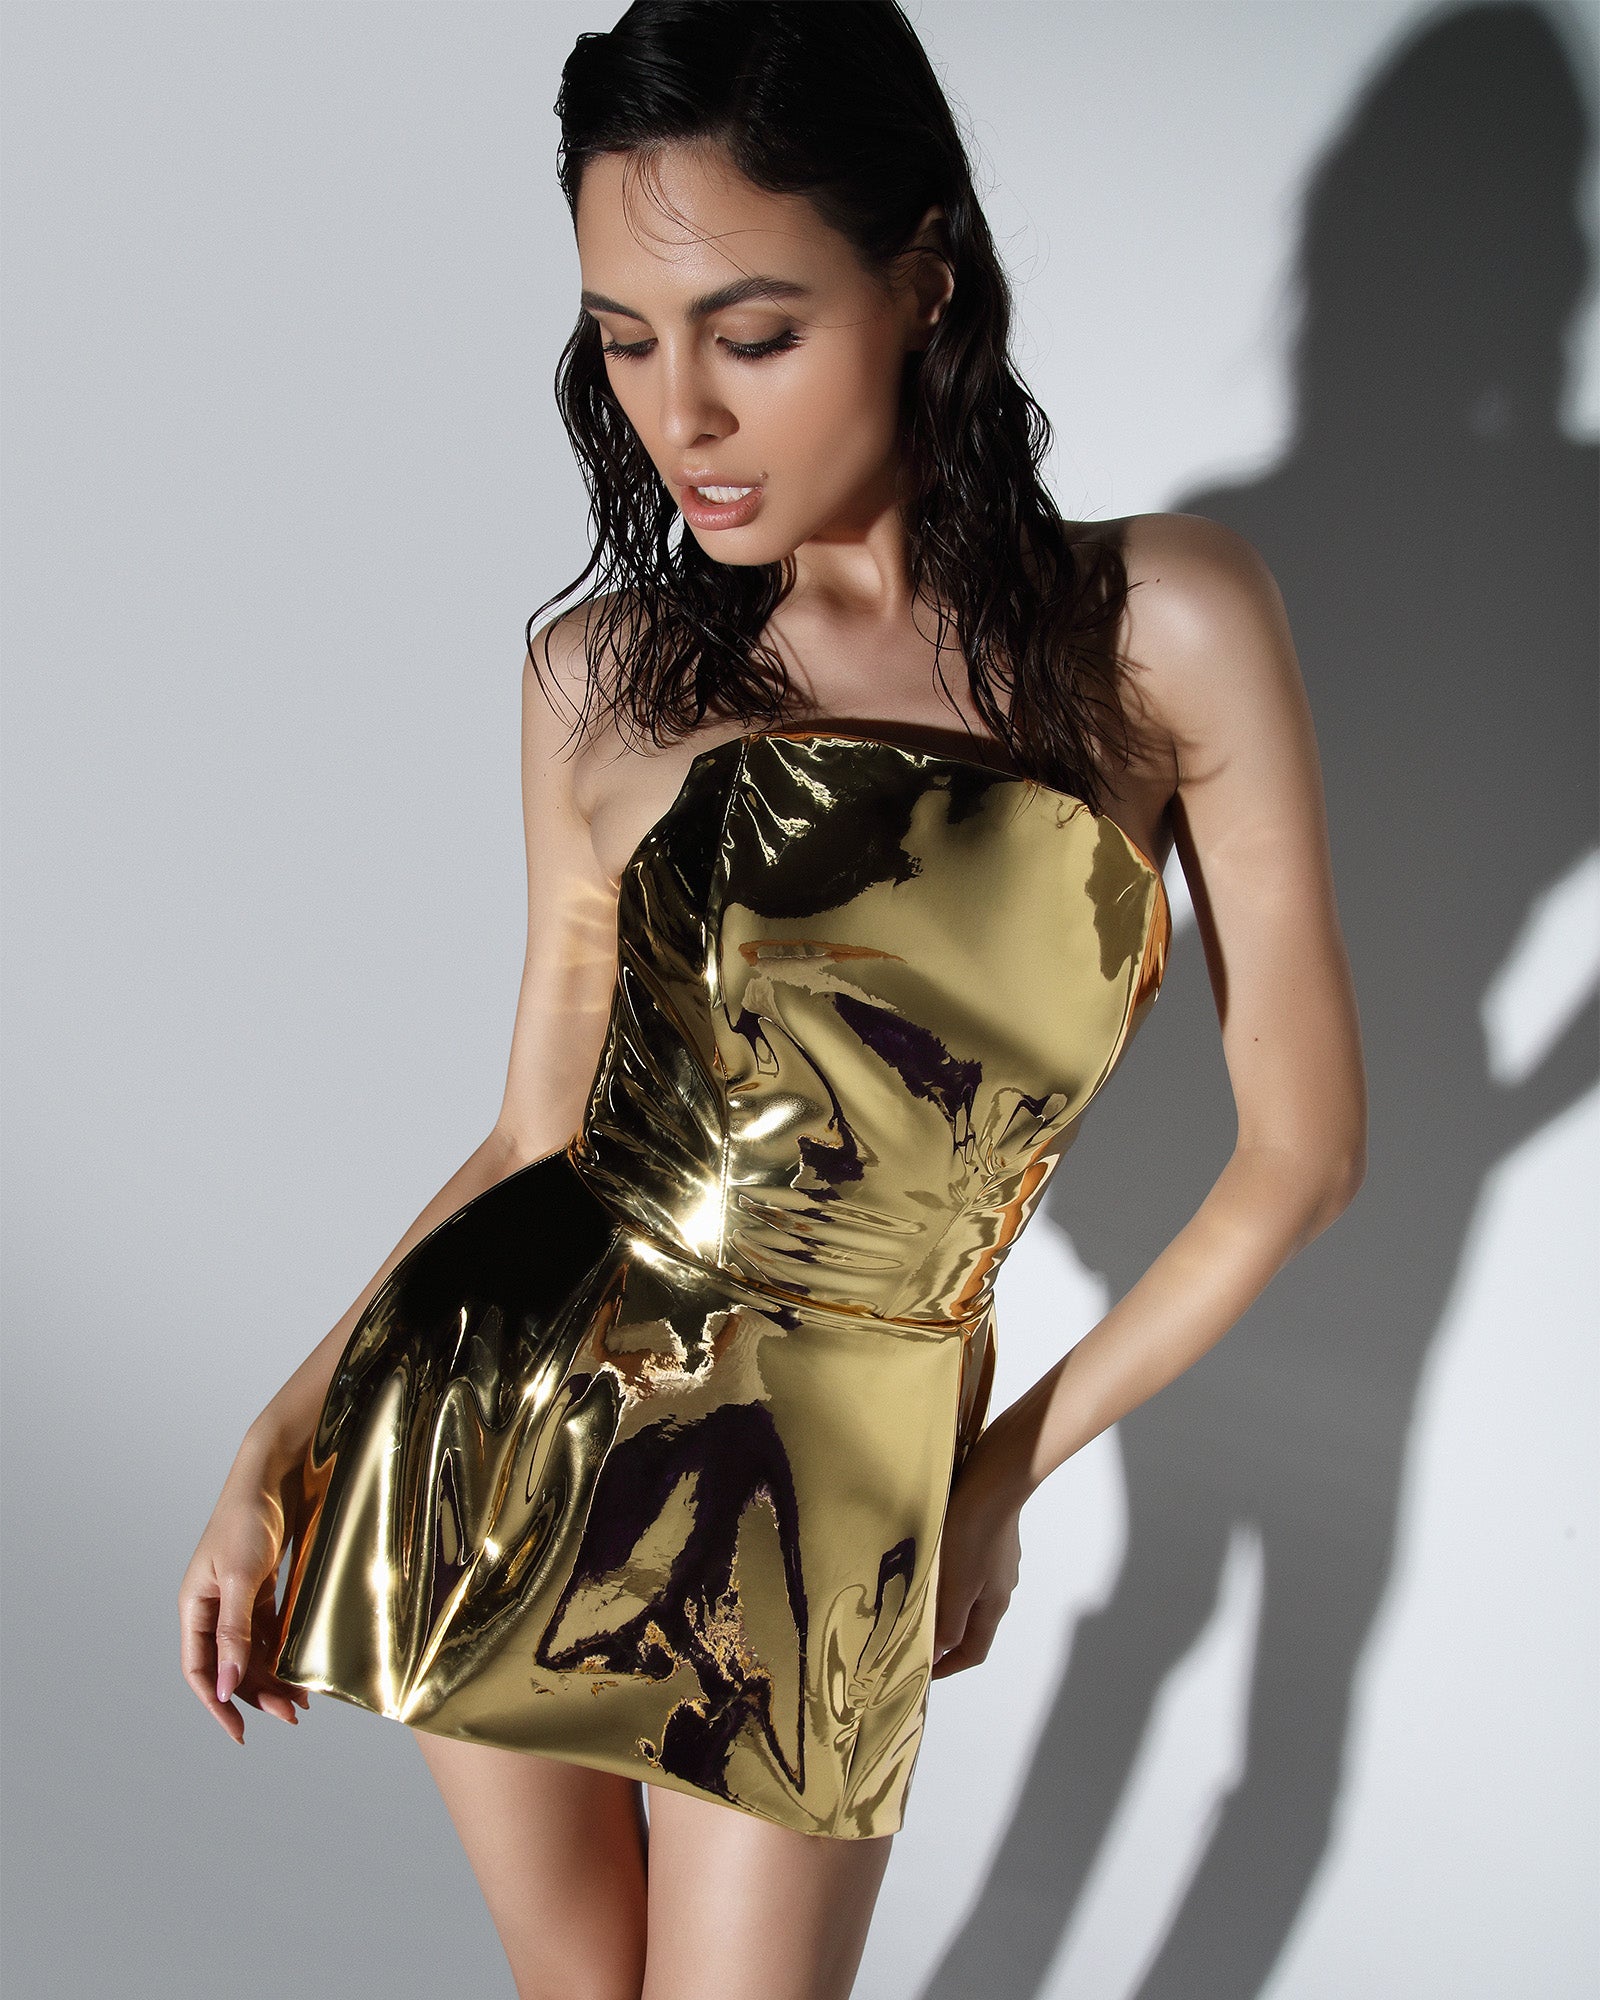 Mirror dress in gold